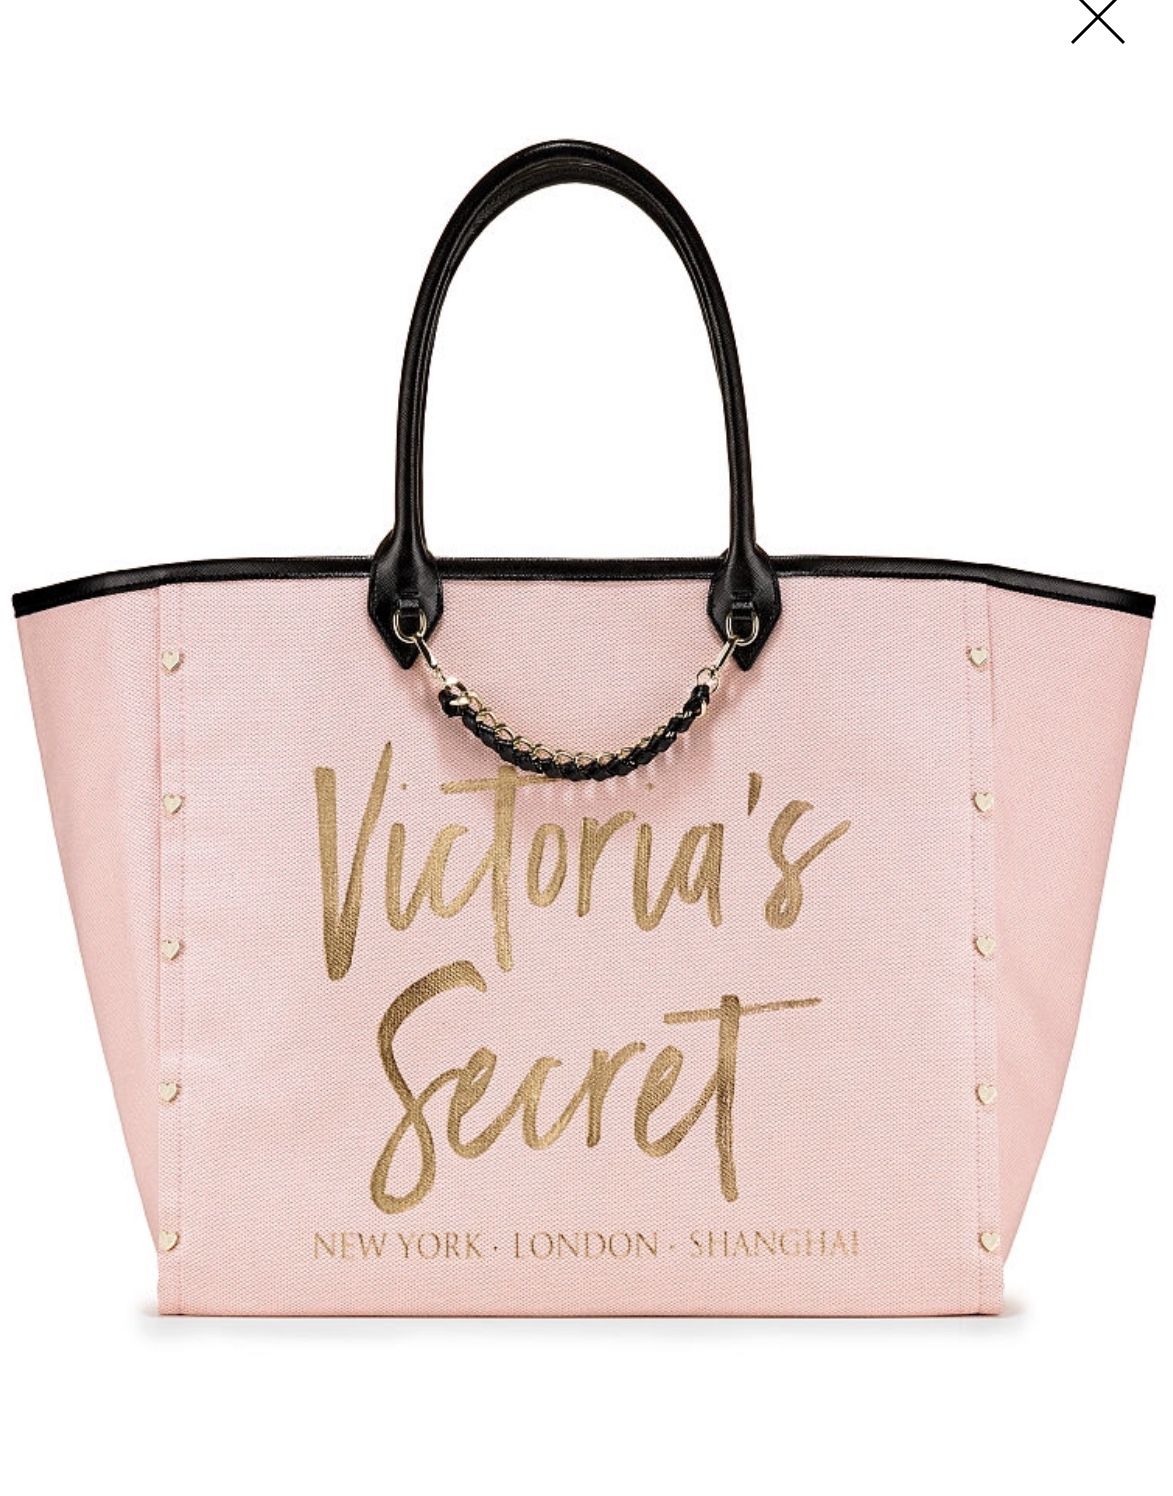 Stylish Victoria Secret Tote Bag